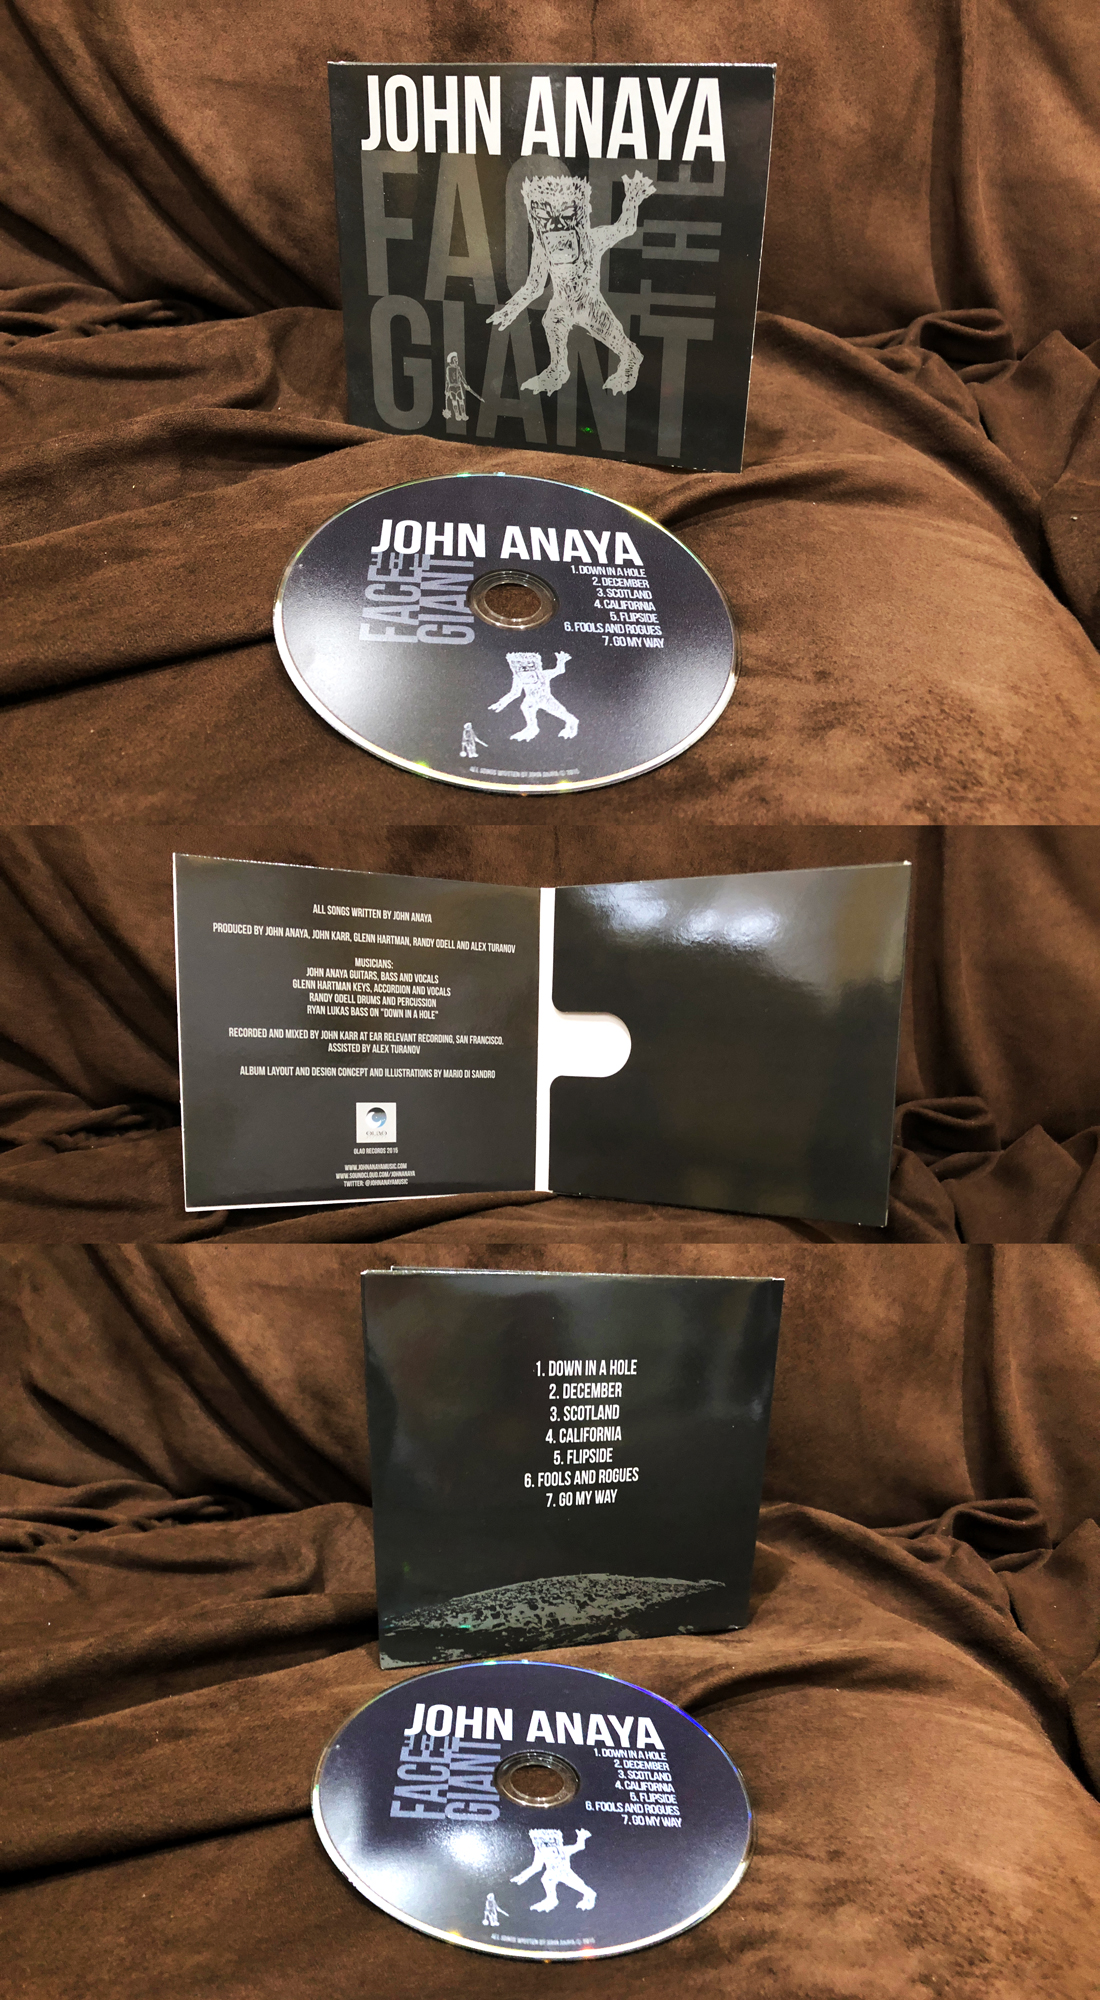 Client: John Anaya, singer-songwriter and musician based in Edinburgh, Scotland. Description: Designed the packaging for John Anaya's album Face The Giant, single-wallet insert including printed on CD.